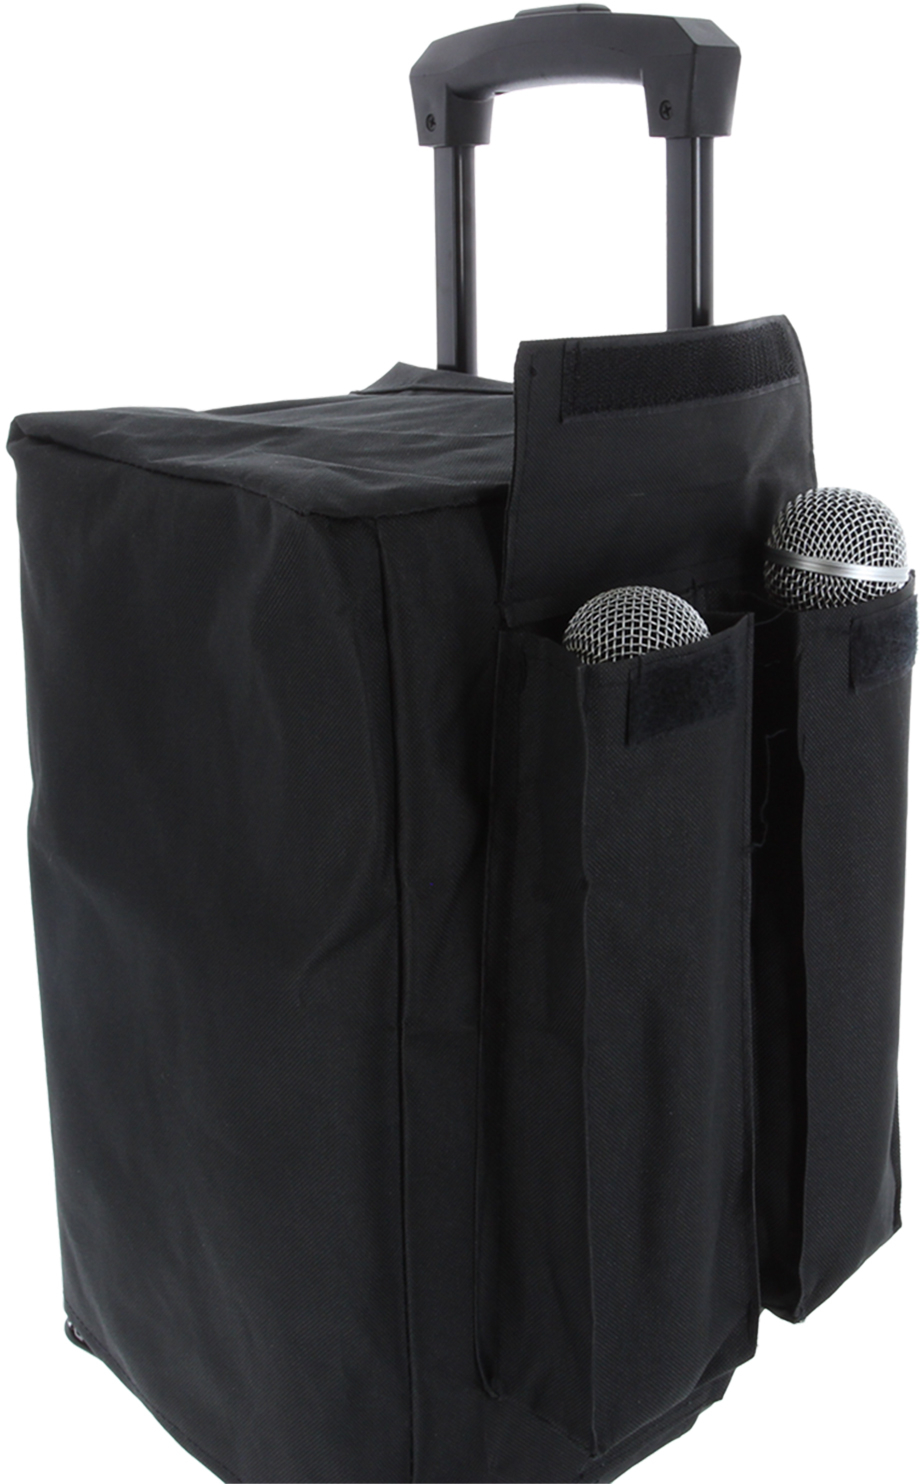 Power Acoustics Bag Taky 10 - Bag for speakers & subwoofer - Variation 2